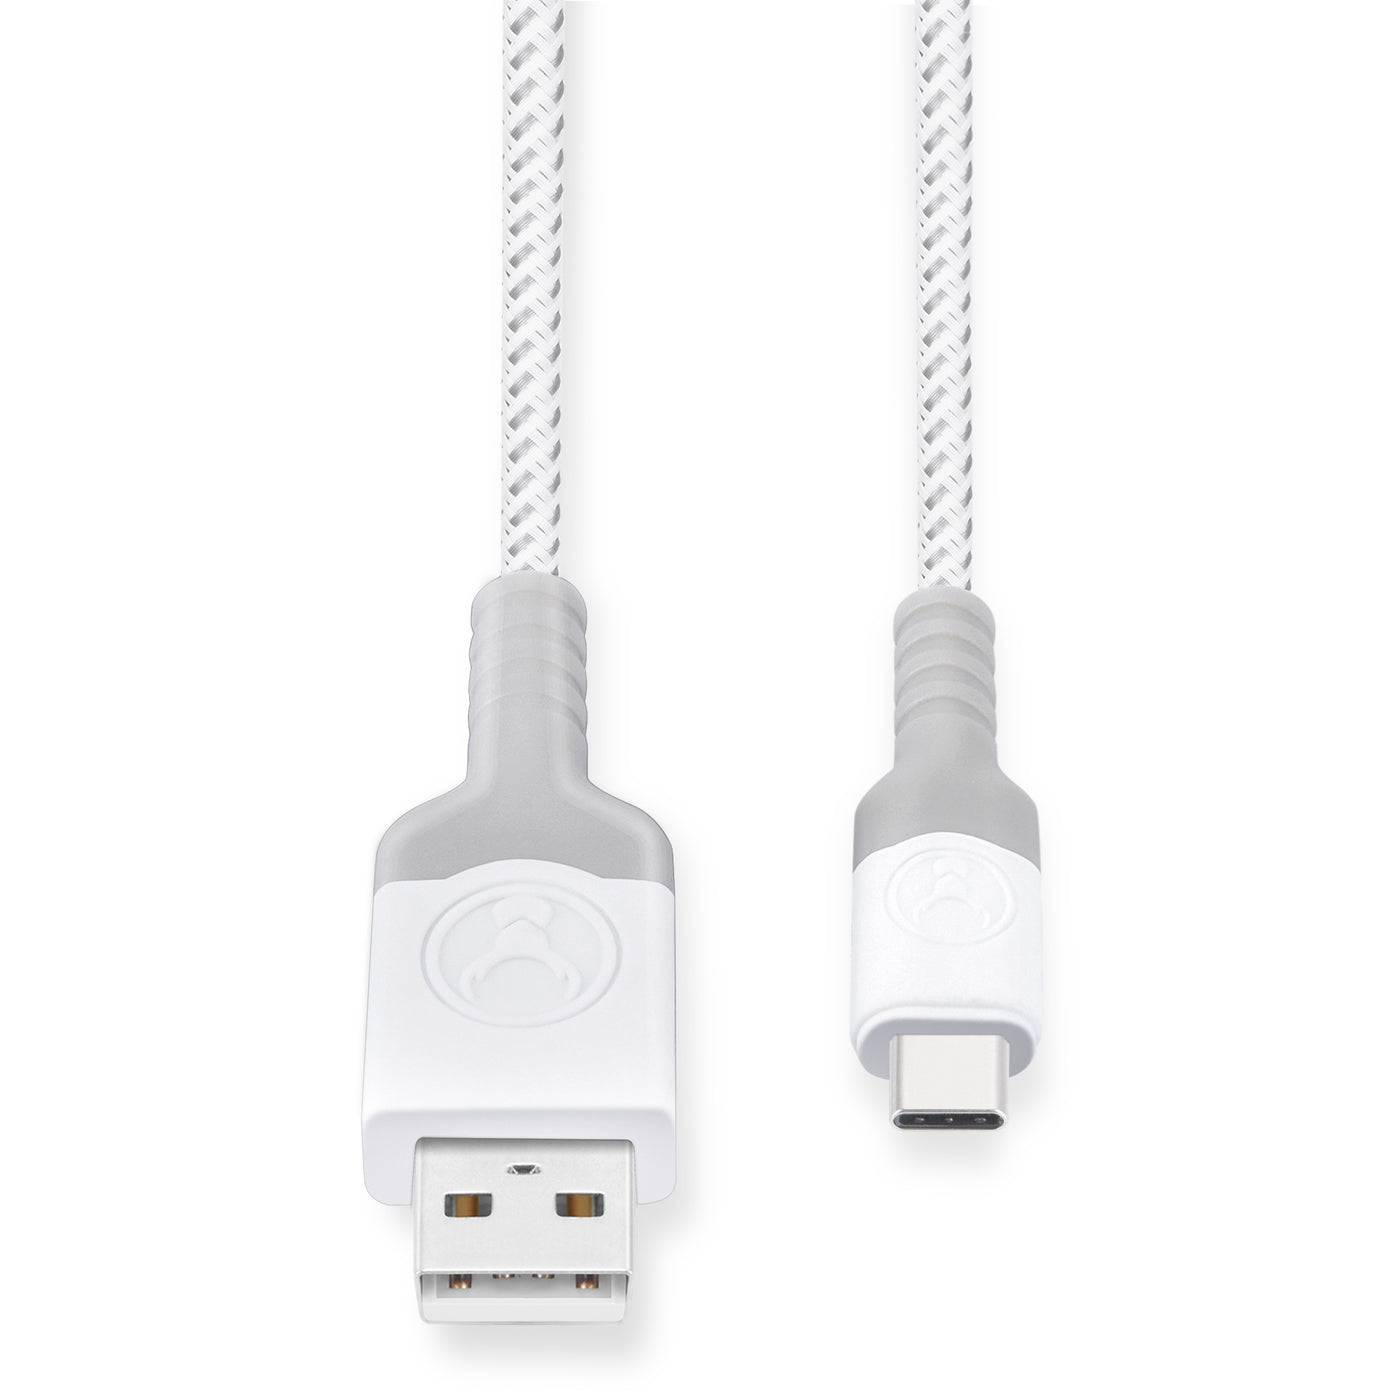 Bonelk USB to USB-C Cable, Long-Life Series (White) - 1.2m